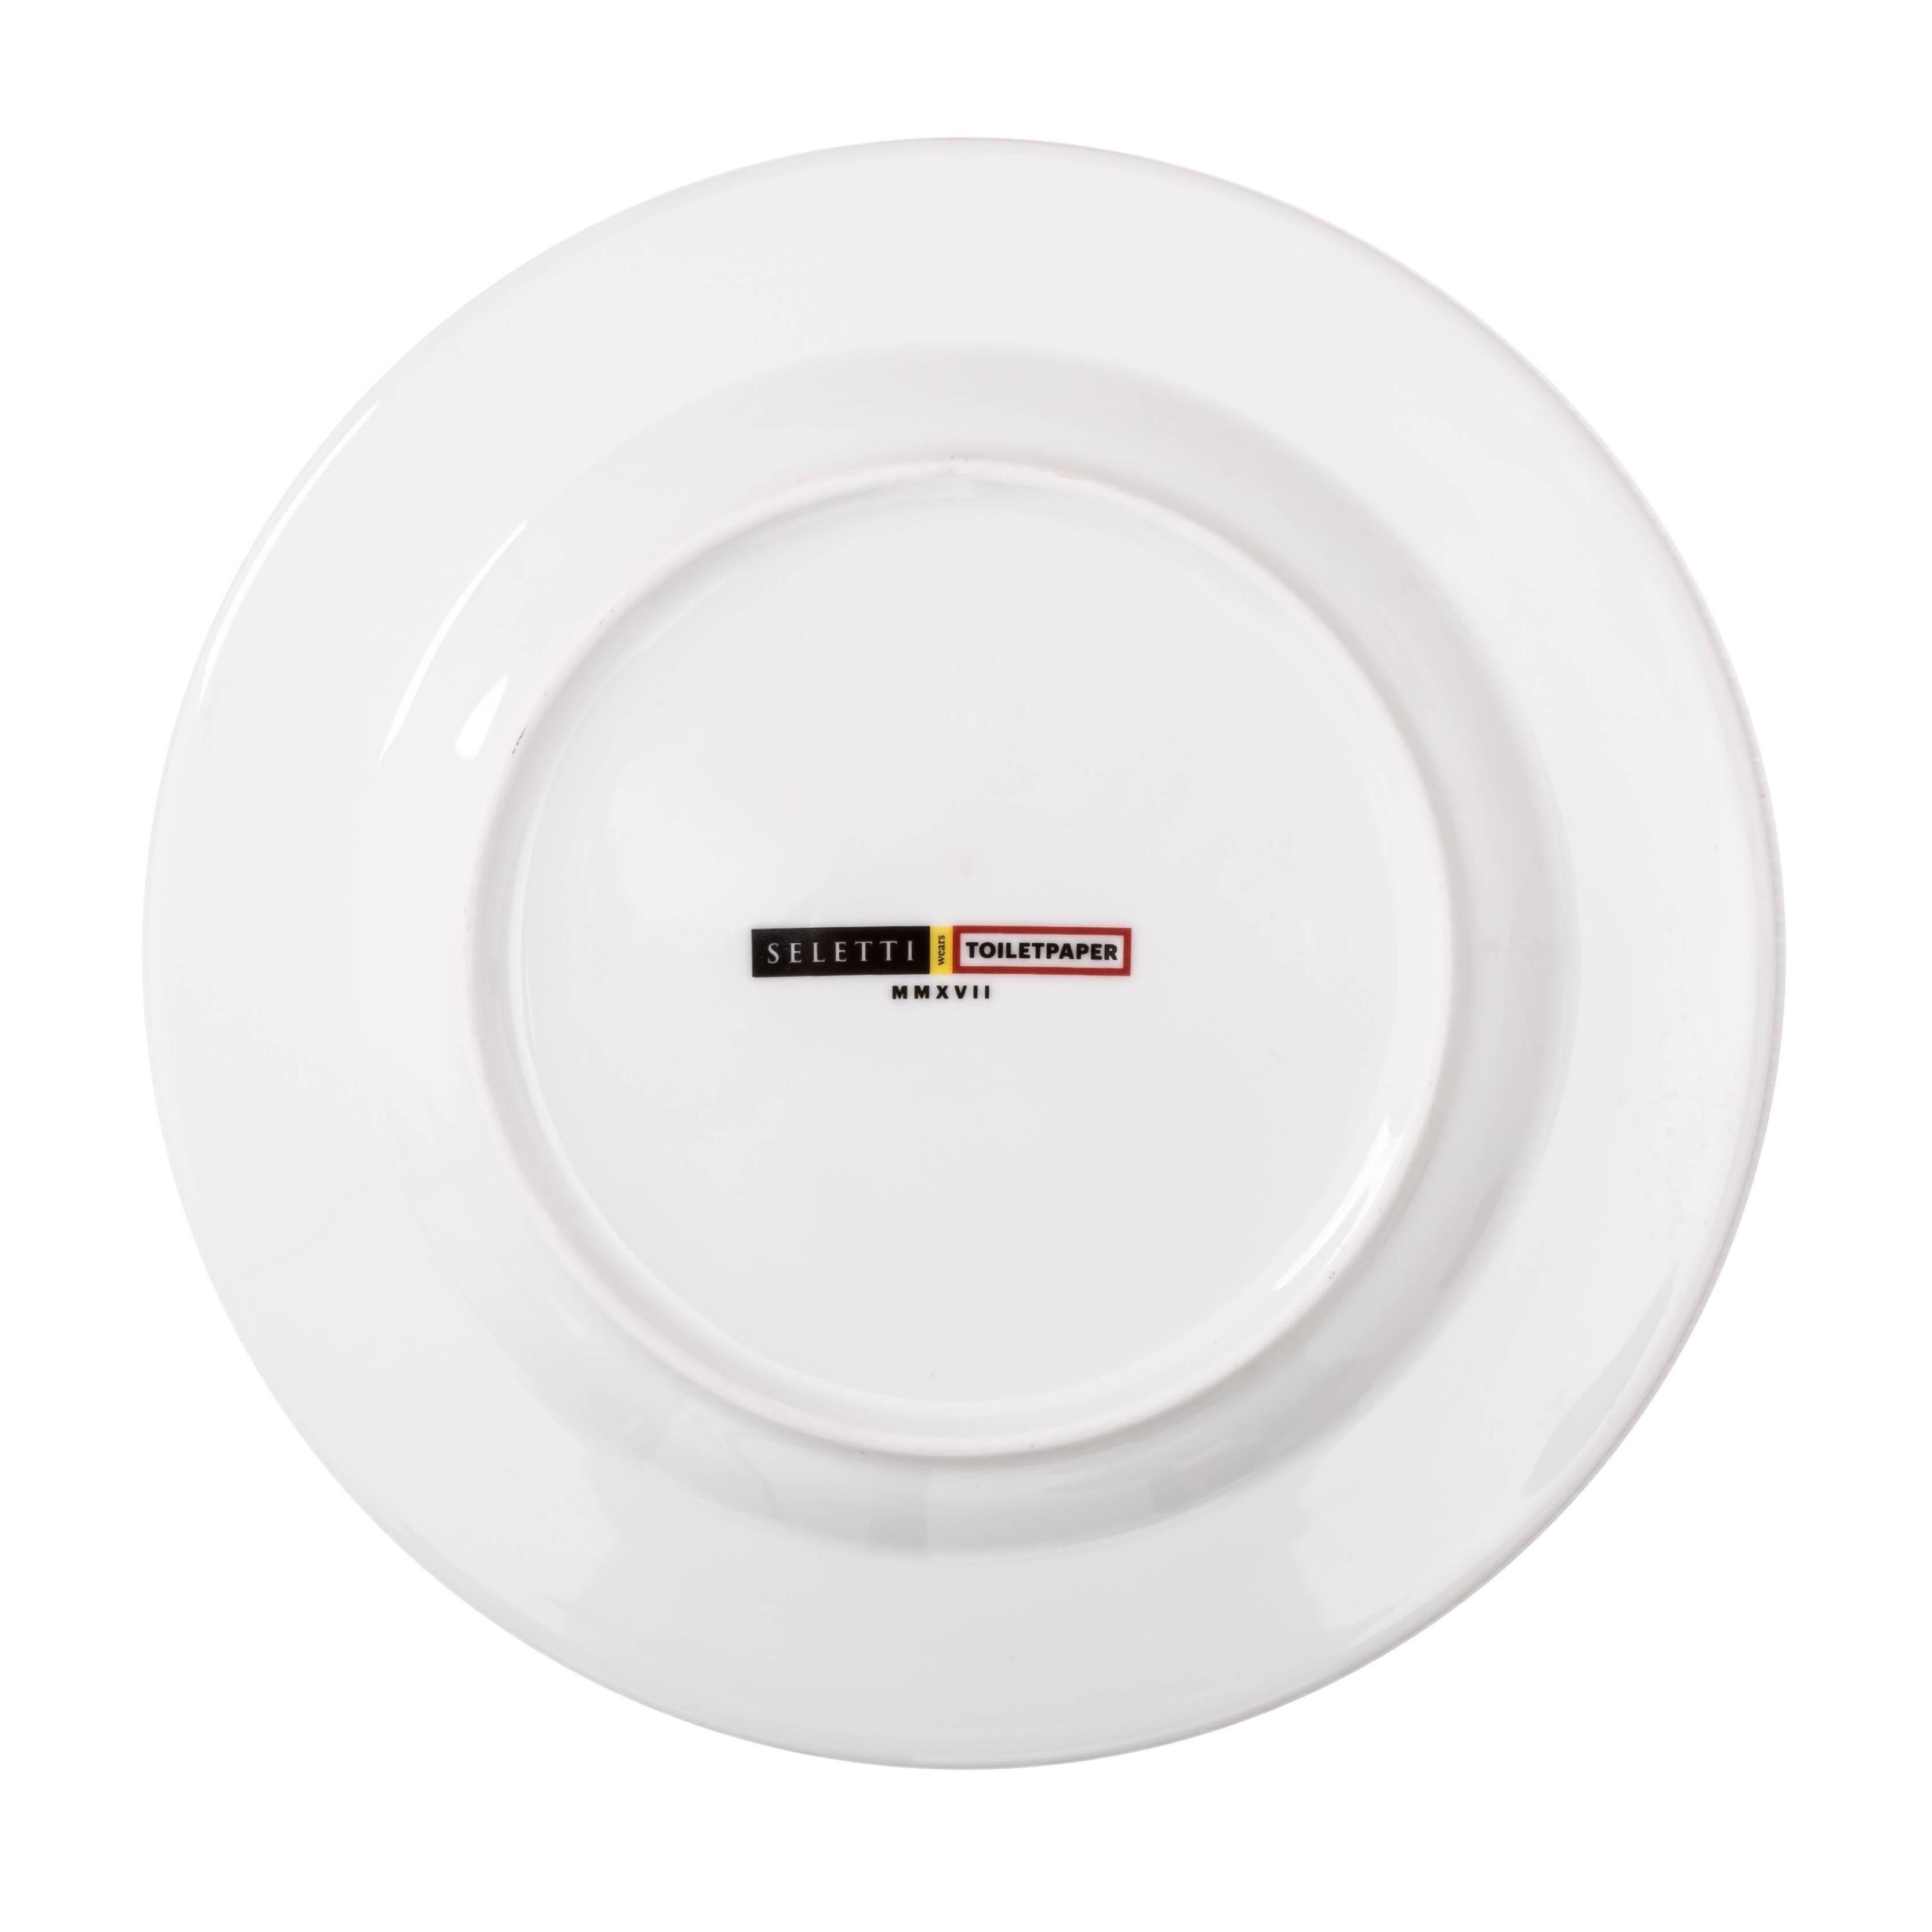 Porcelain Plate Set by Maurizio Cattelan & Pierpaolo Ferrari 3